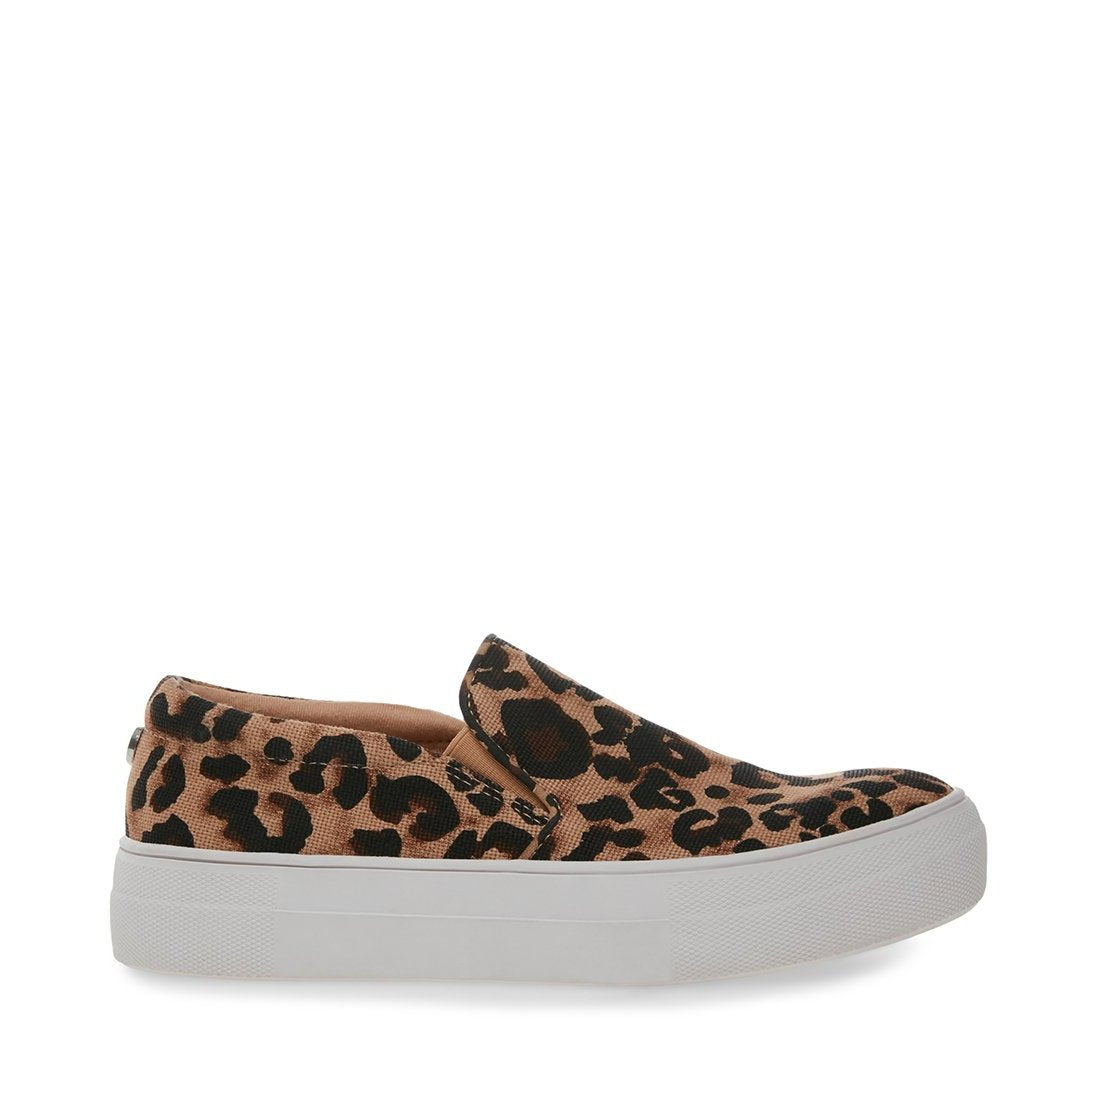 Steve Madden Women's Gills-A Platform Sneaker - Leopard - ShoeShackOnline